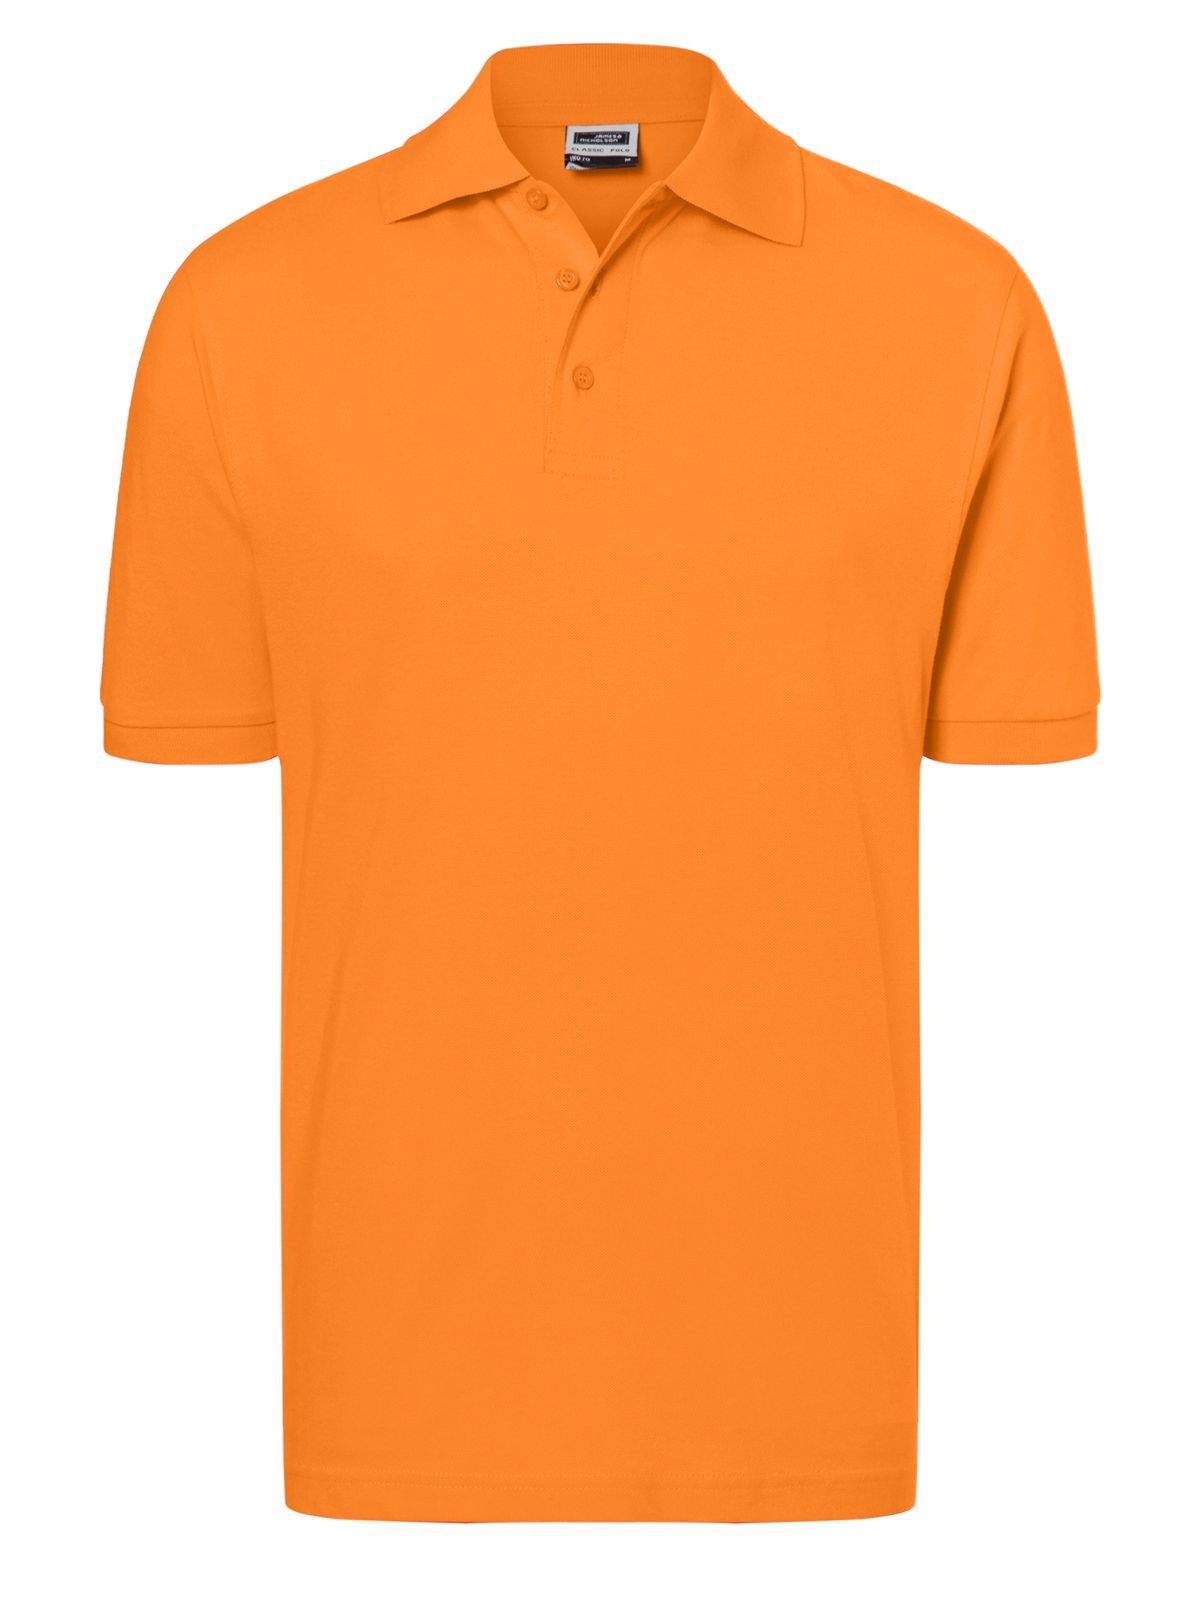 poloshirt-classic-orange.webp